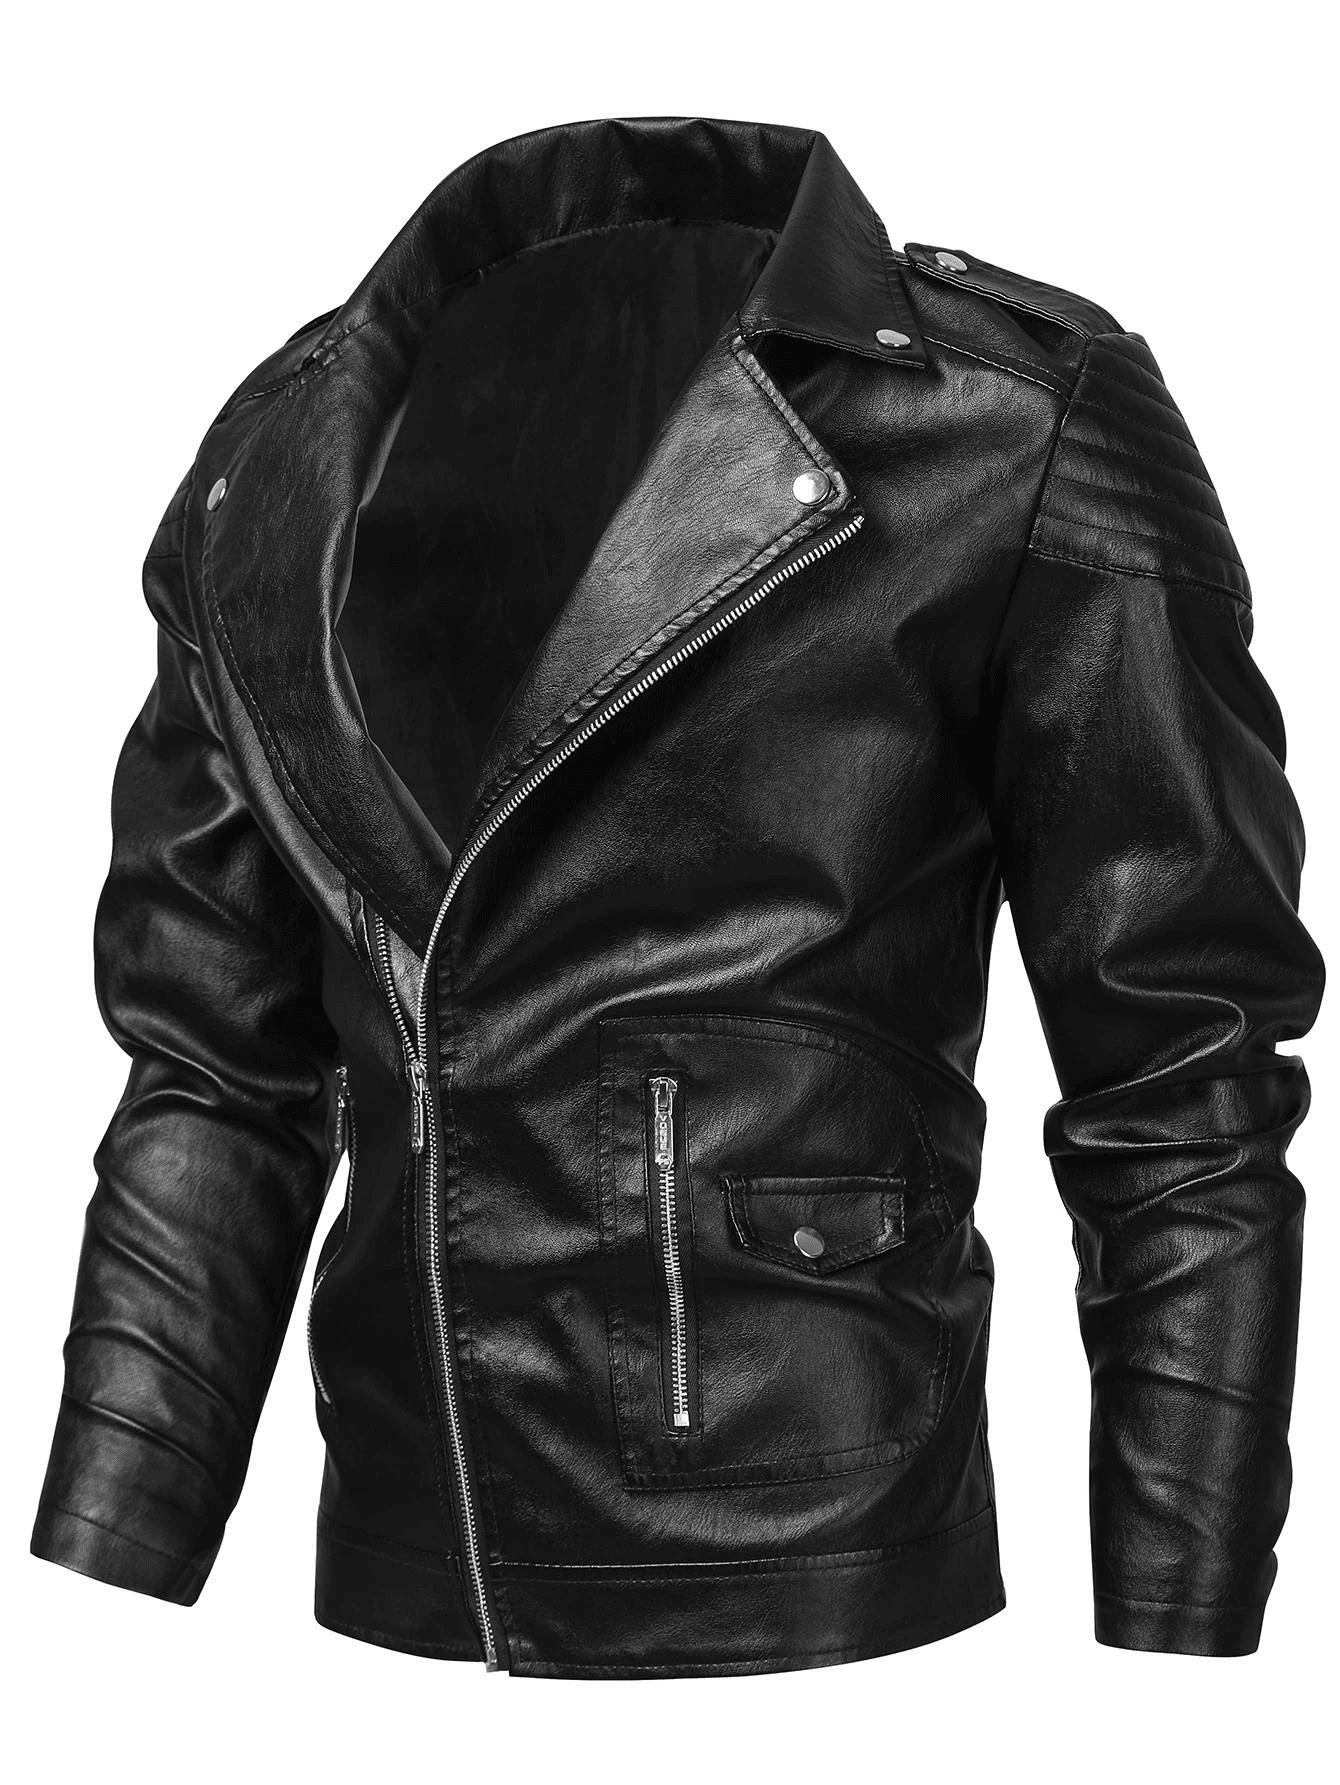 Men's Real Leather Jacket Black Fashion Series BIKER CASUAL RETRO STYLE 1418 